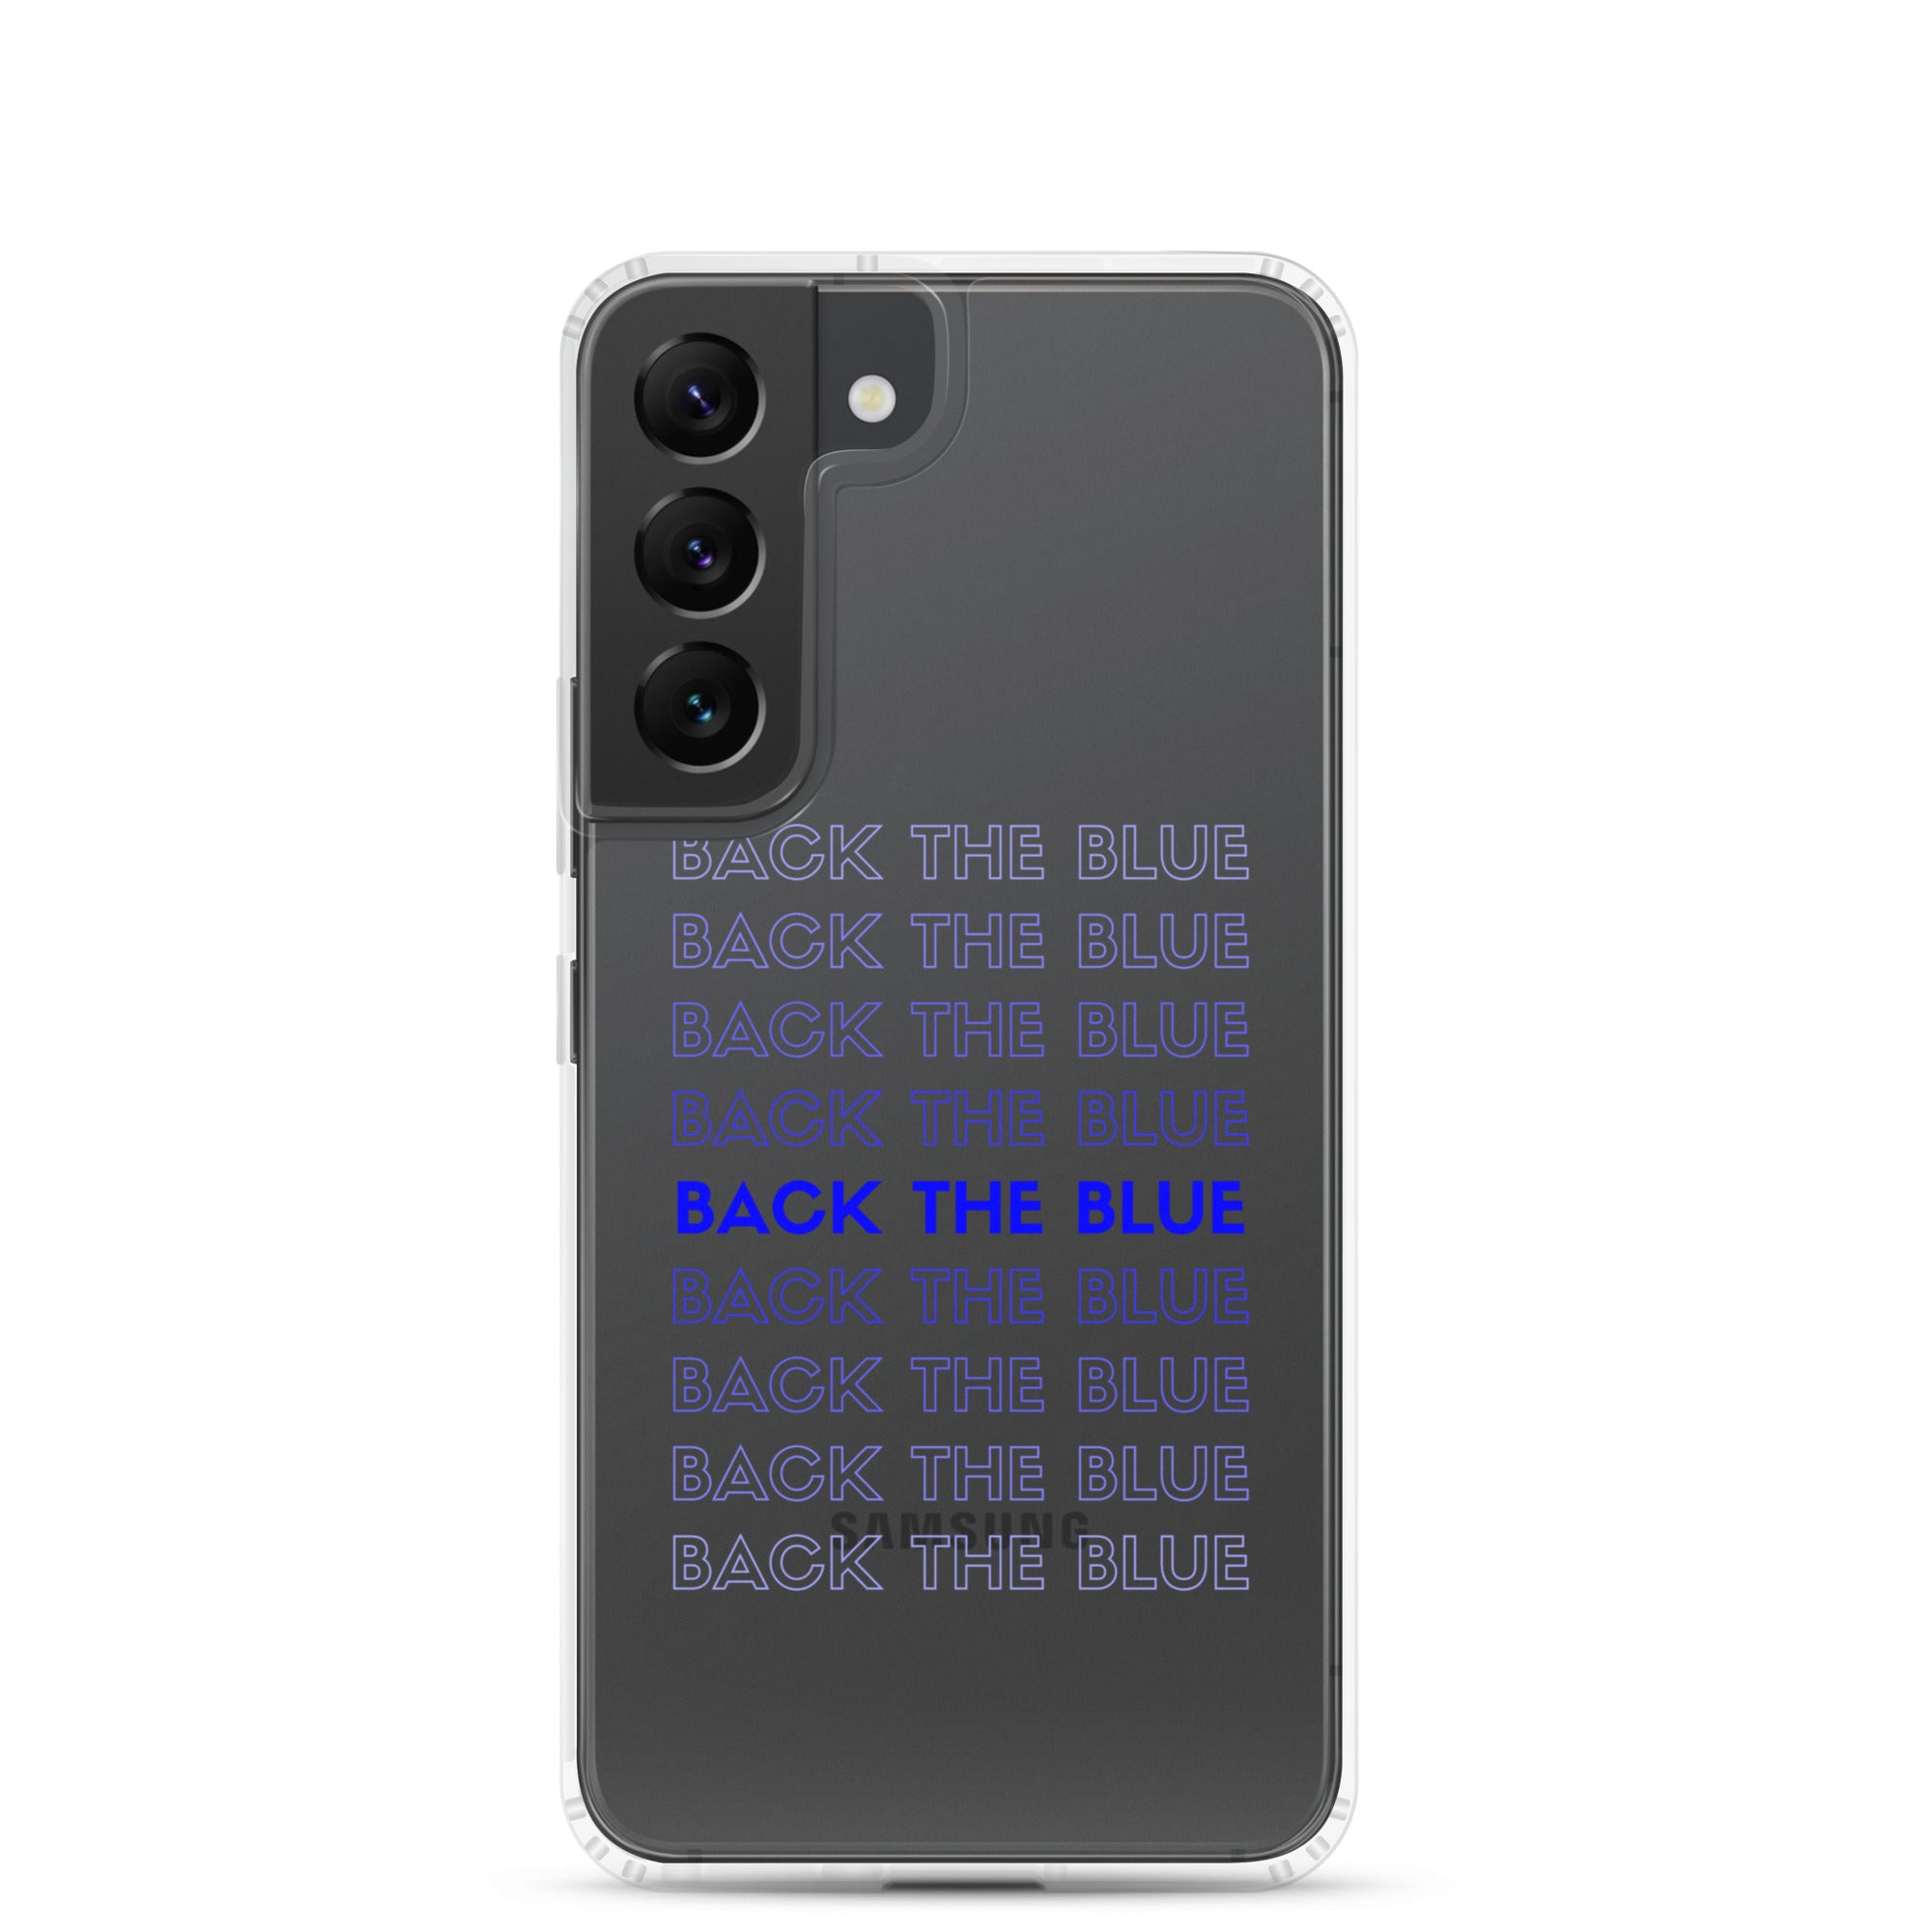 Back the Blue Gradient Samsung Case